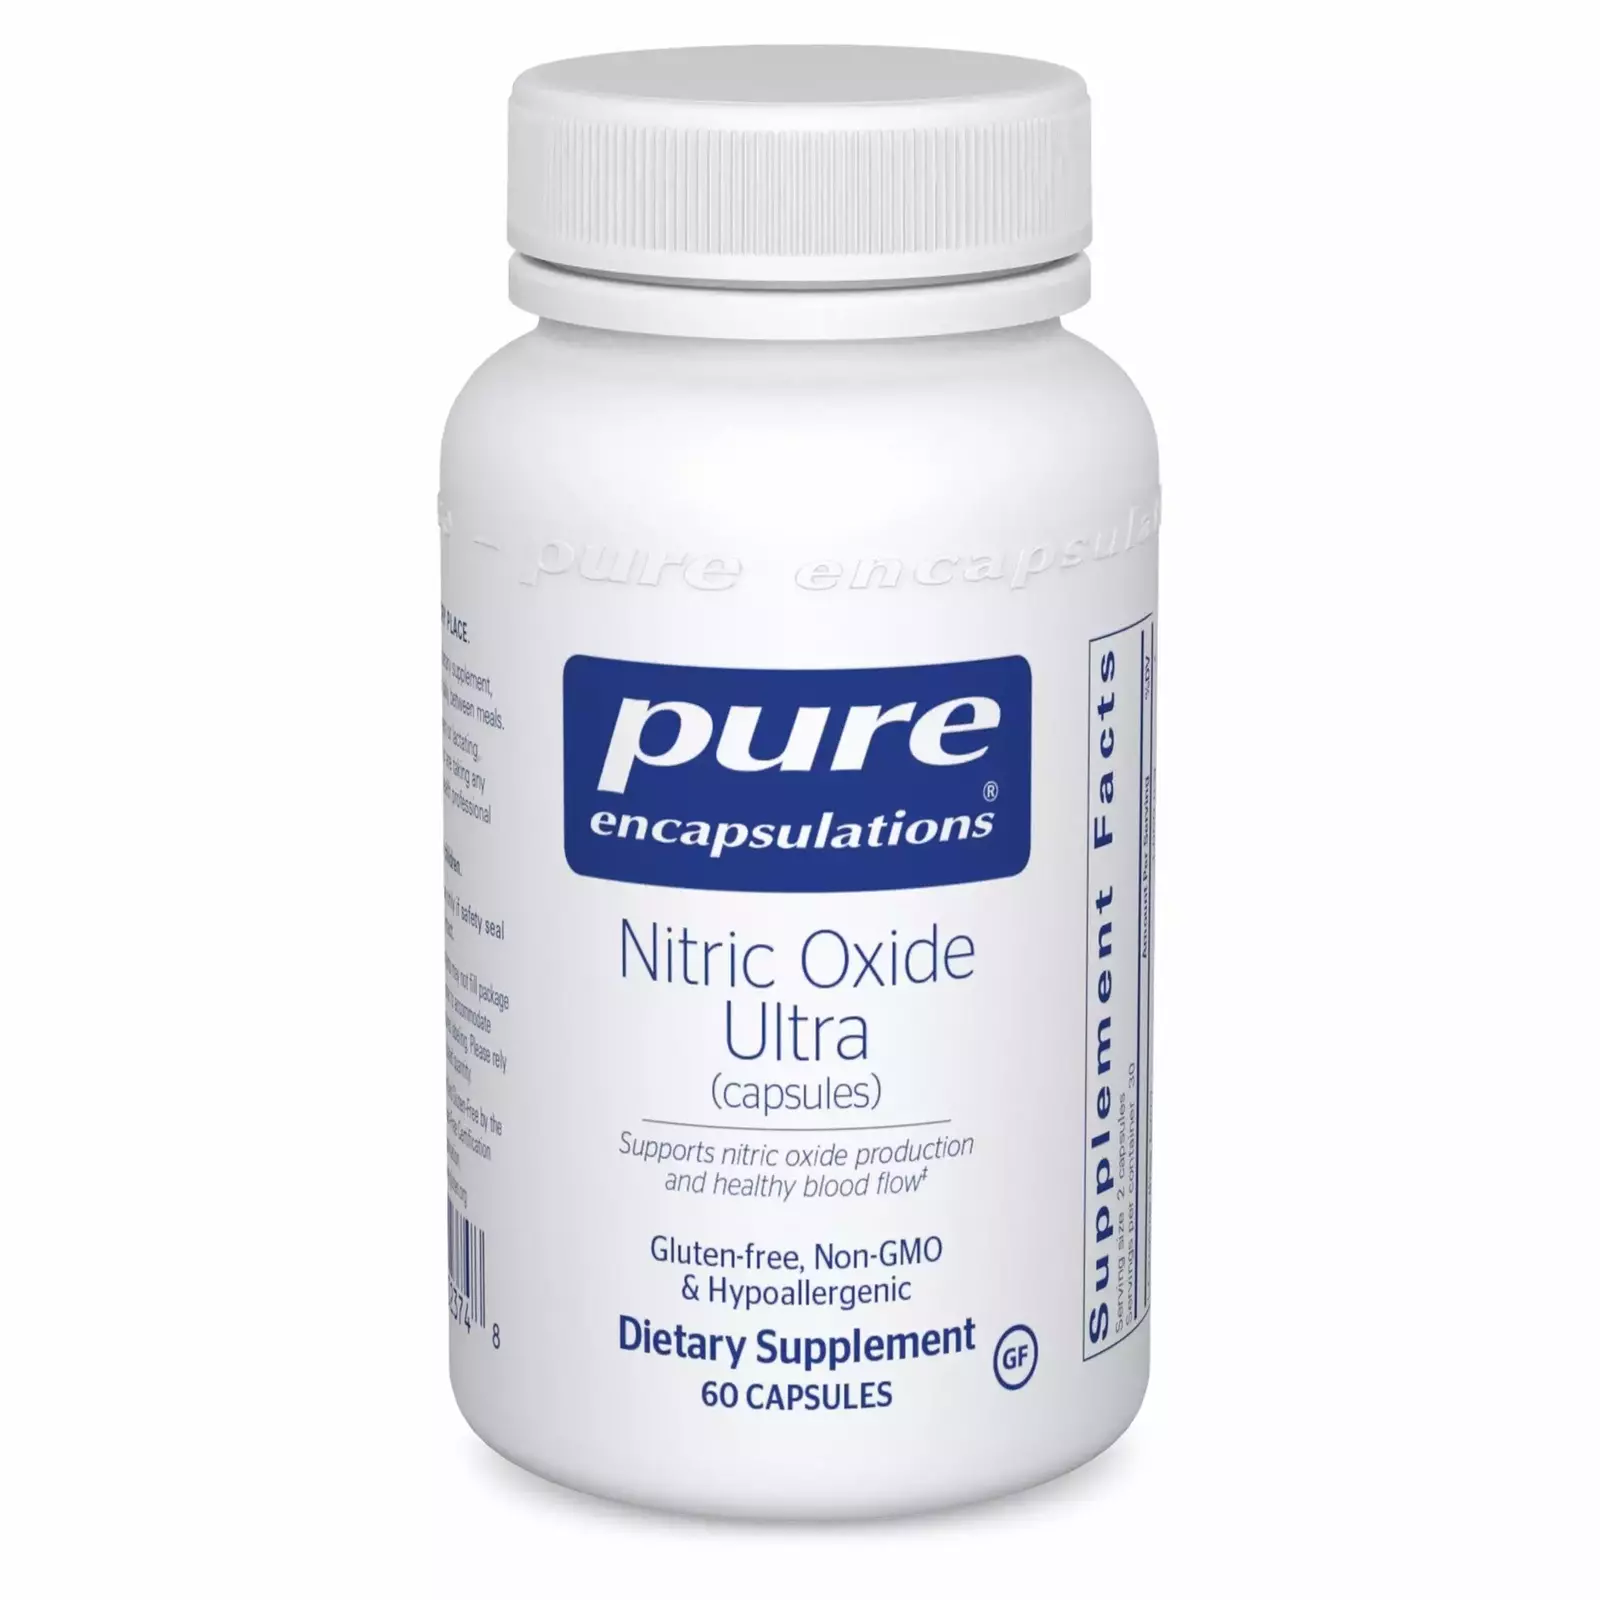 Nitric Oxide Ultra (capsules)